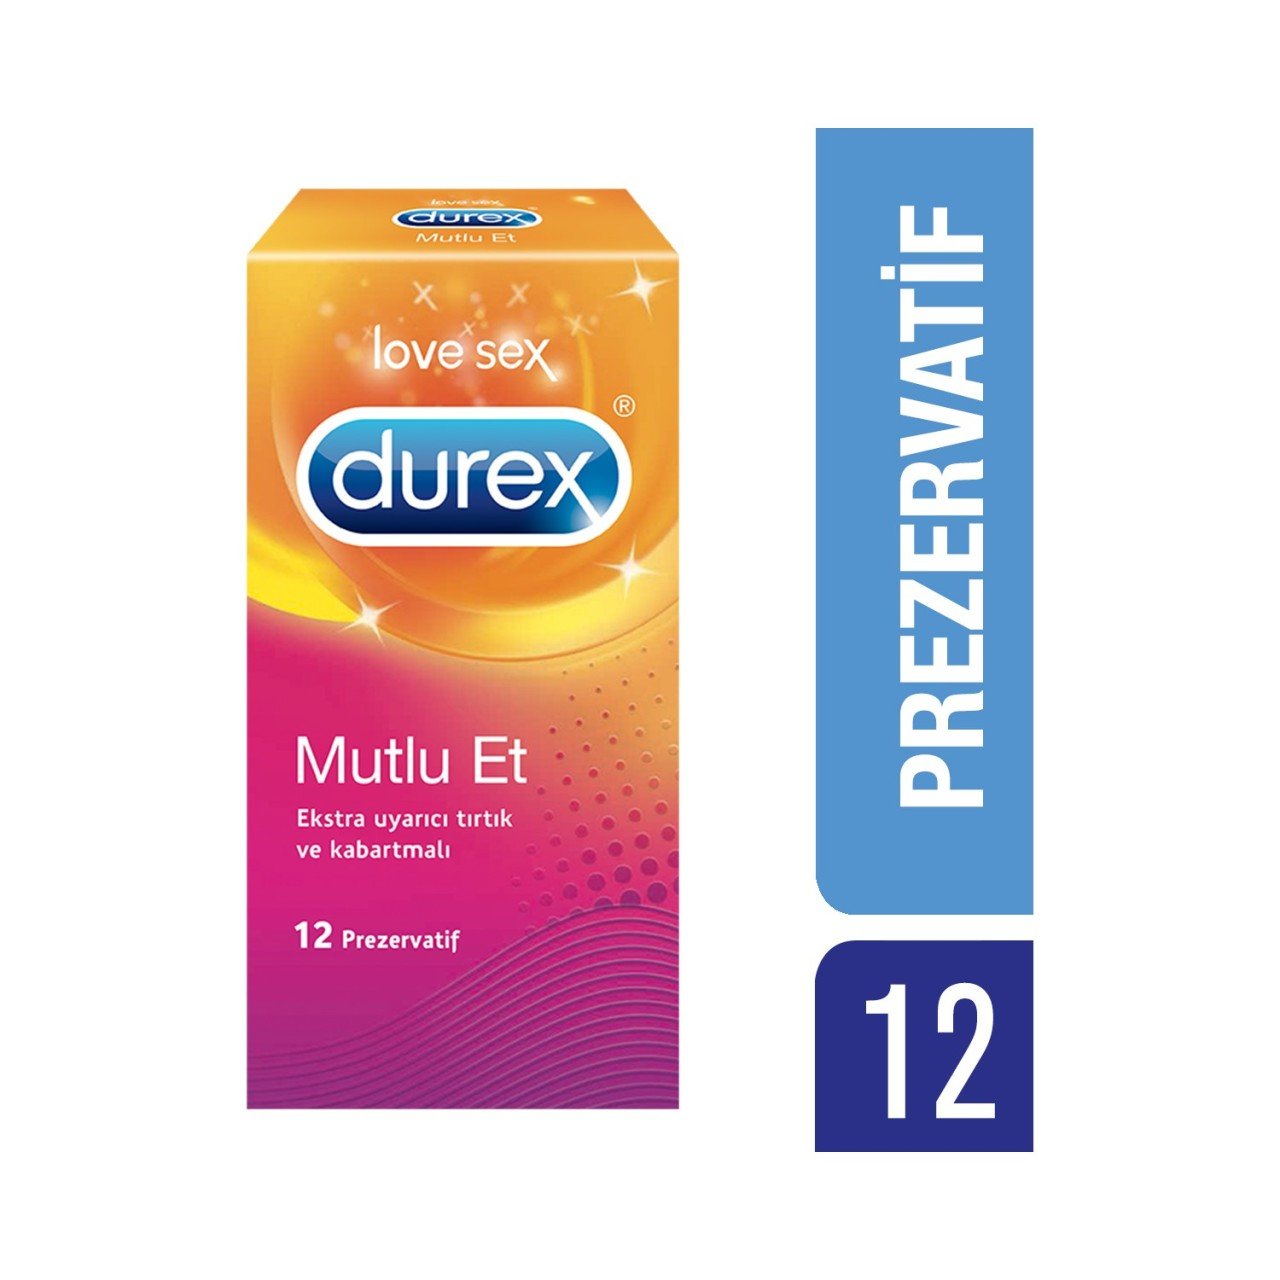 Durex Mutlu Et Prezervatif 12'li 43,13 TL